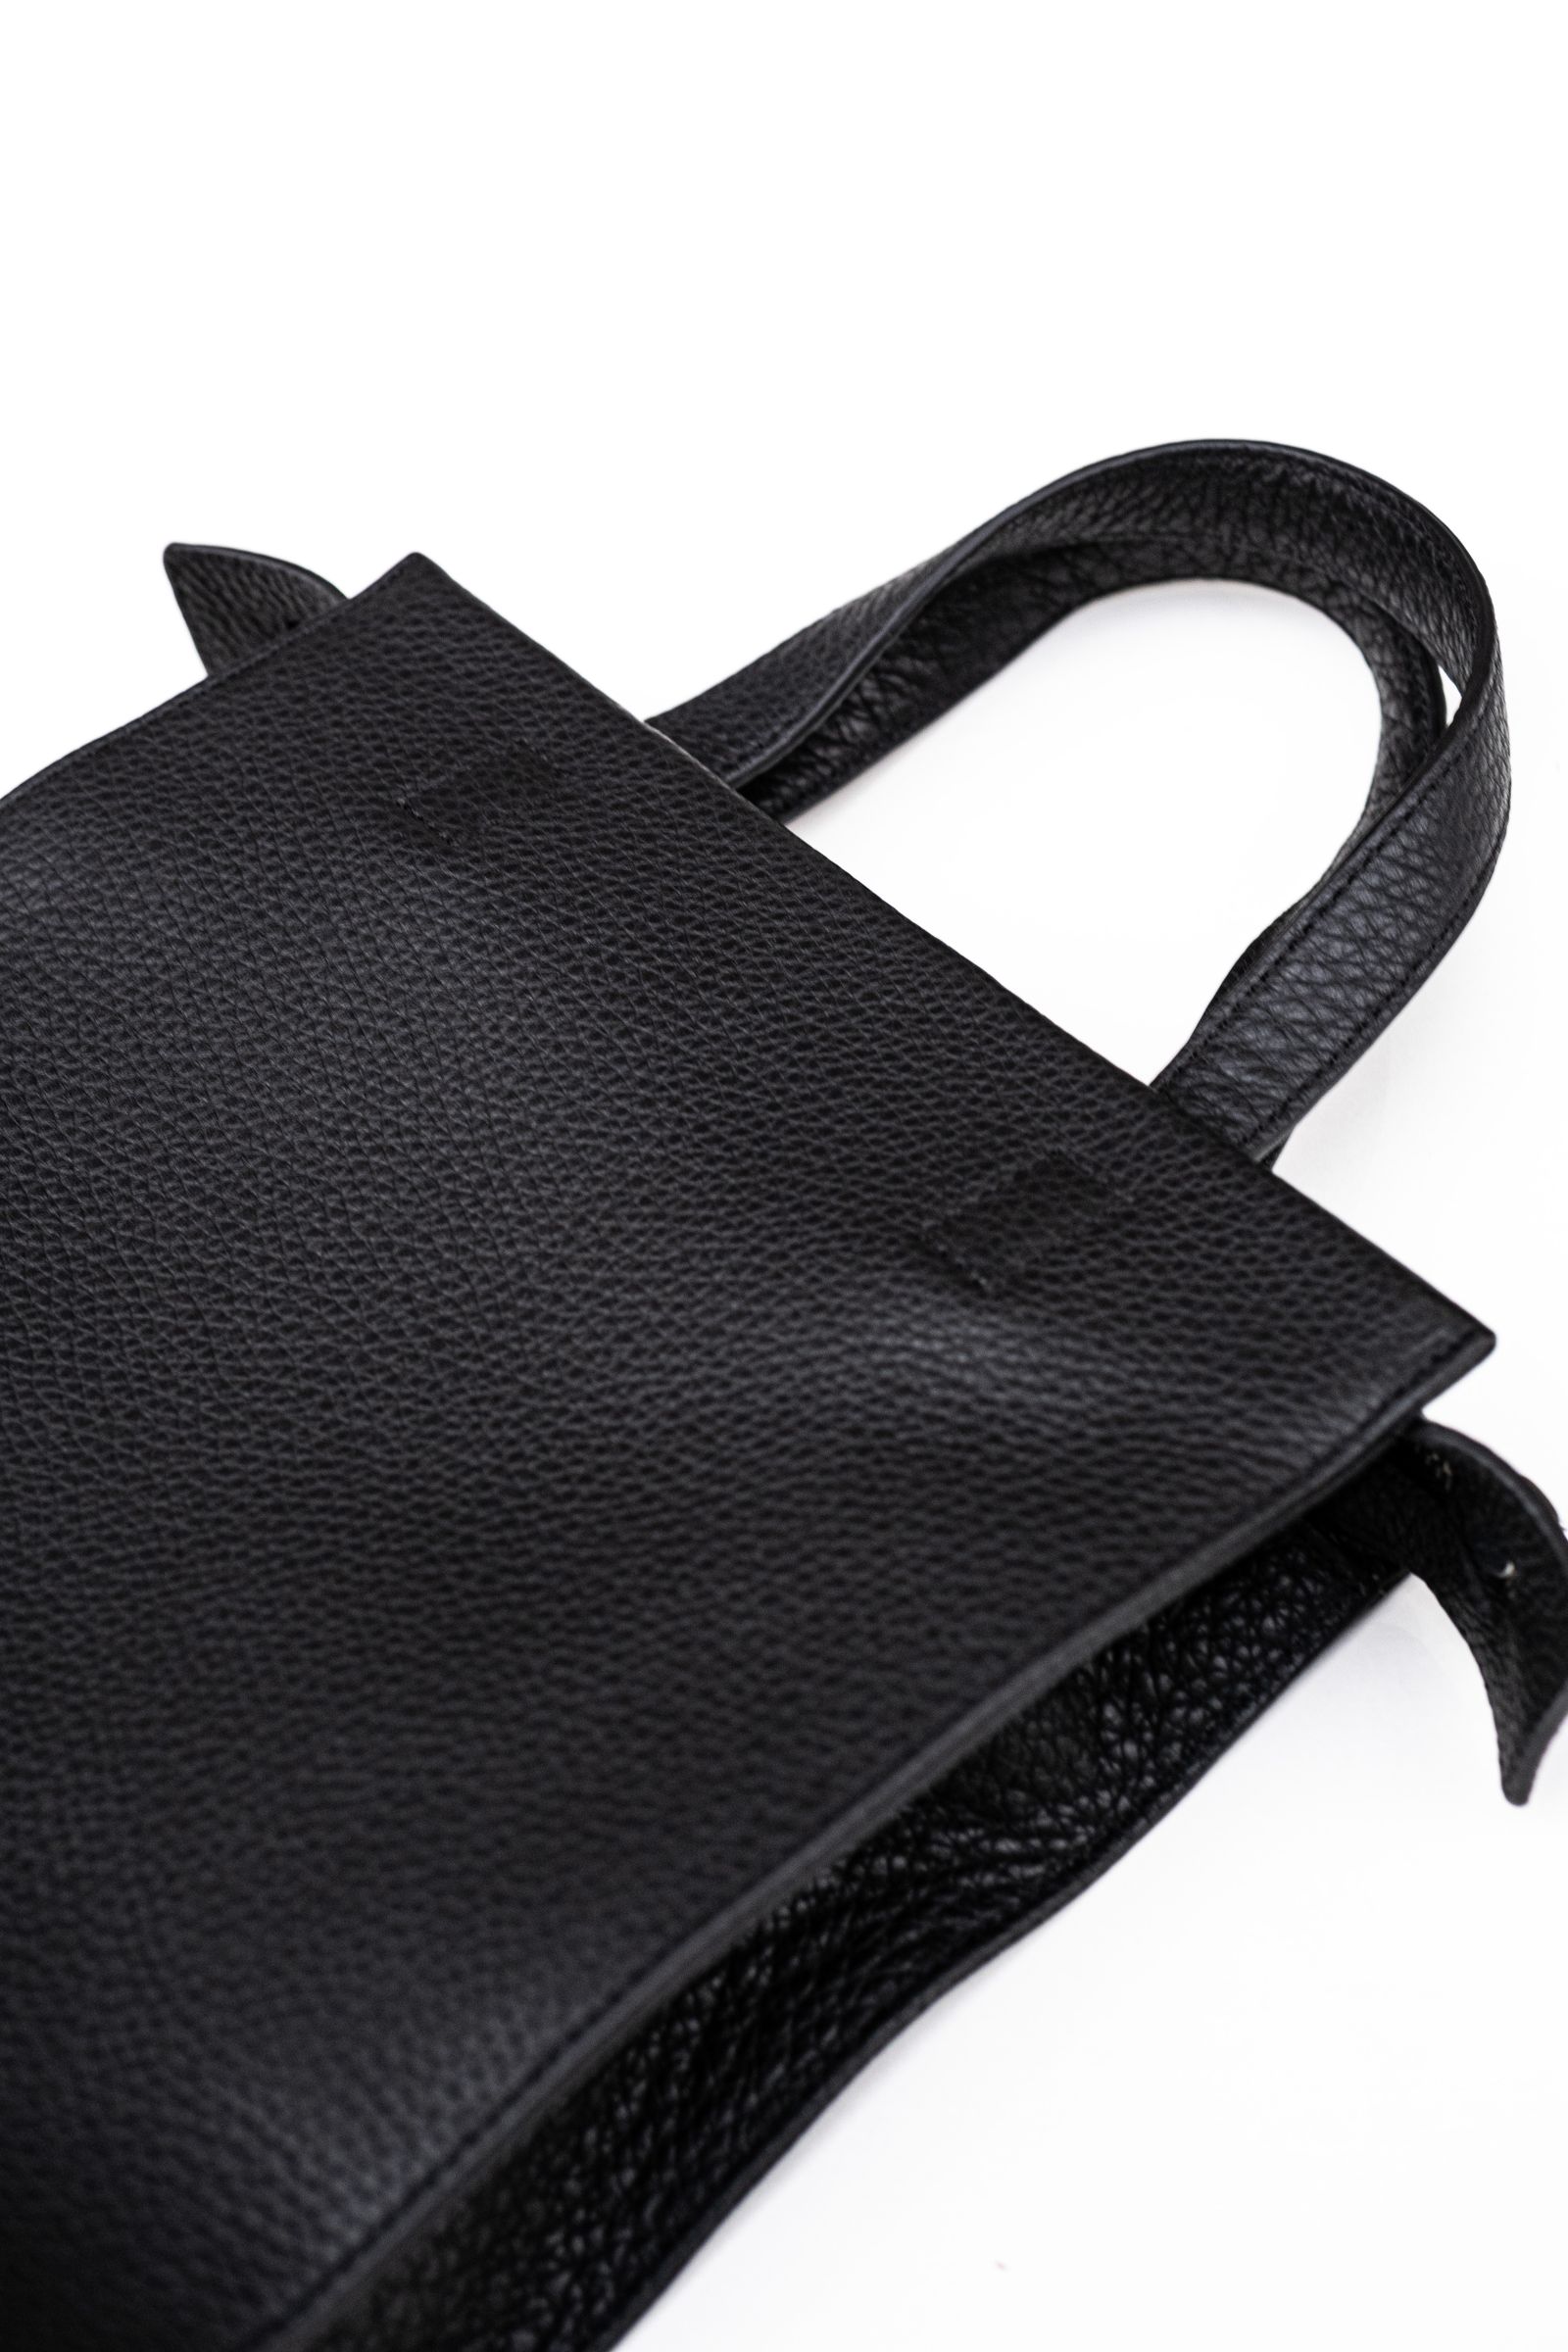 EARLE - Shoe Sole Square Mini Bag / Black | Retikle Online Store